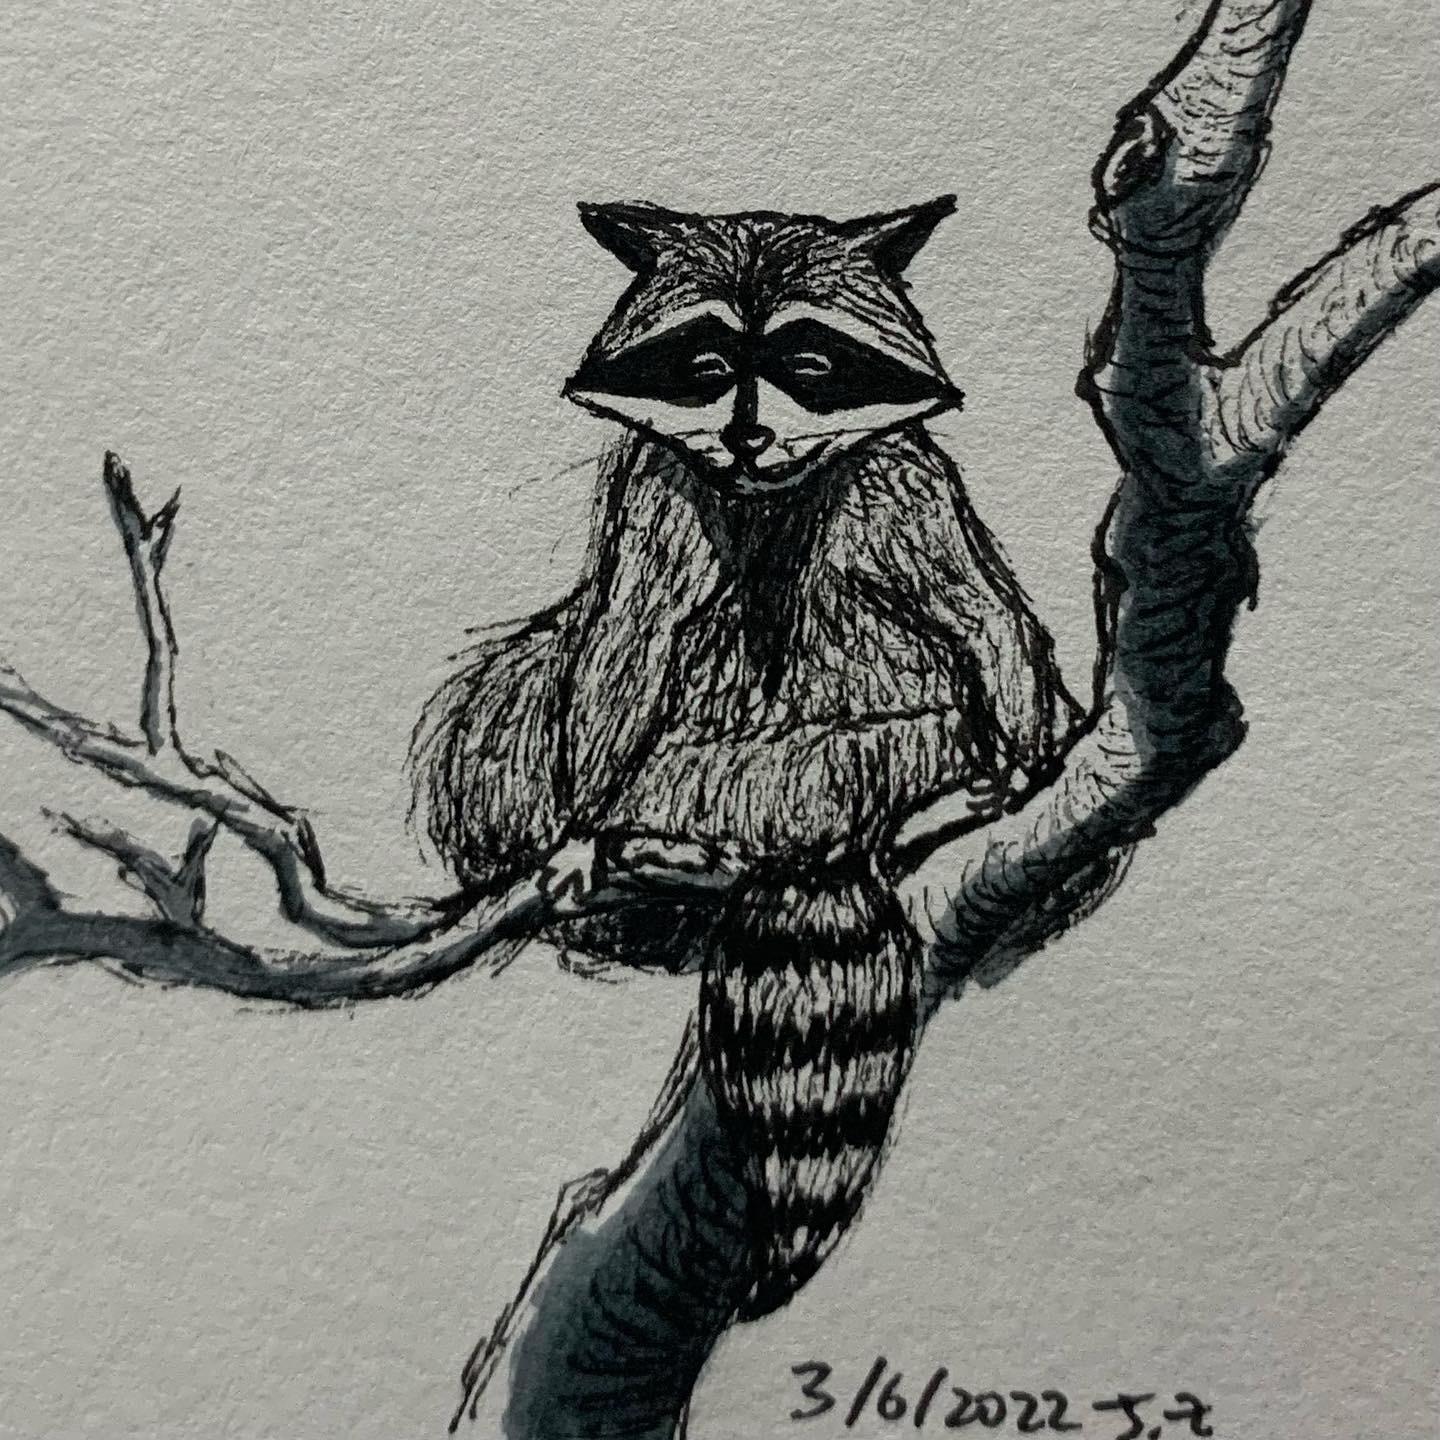 Lisp Raccoon sunbathes on a tree 3/6/2022 Sketchdaily